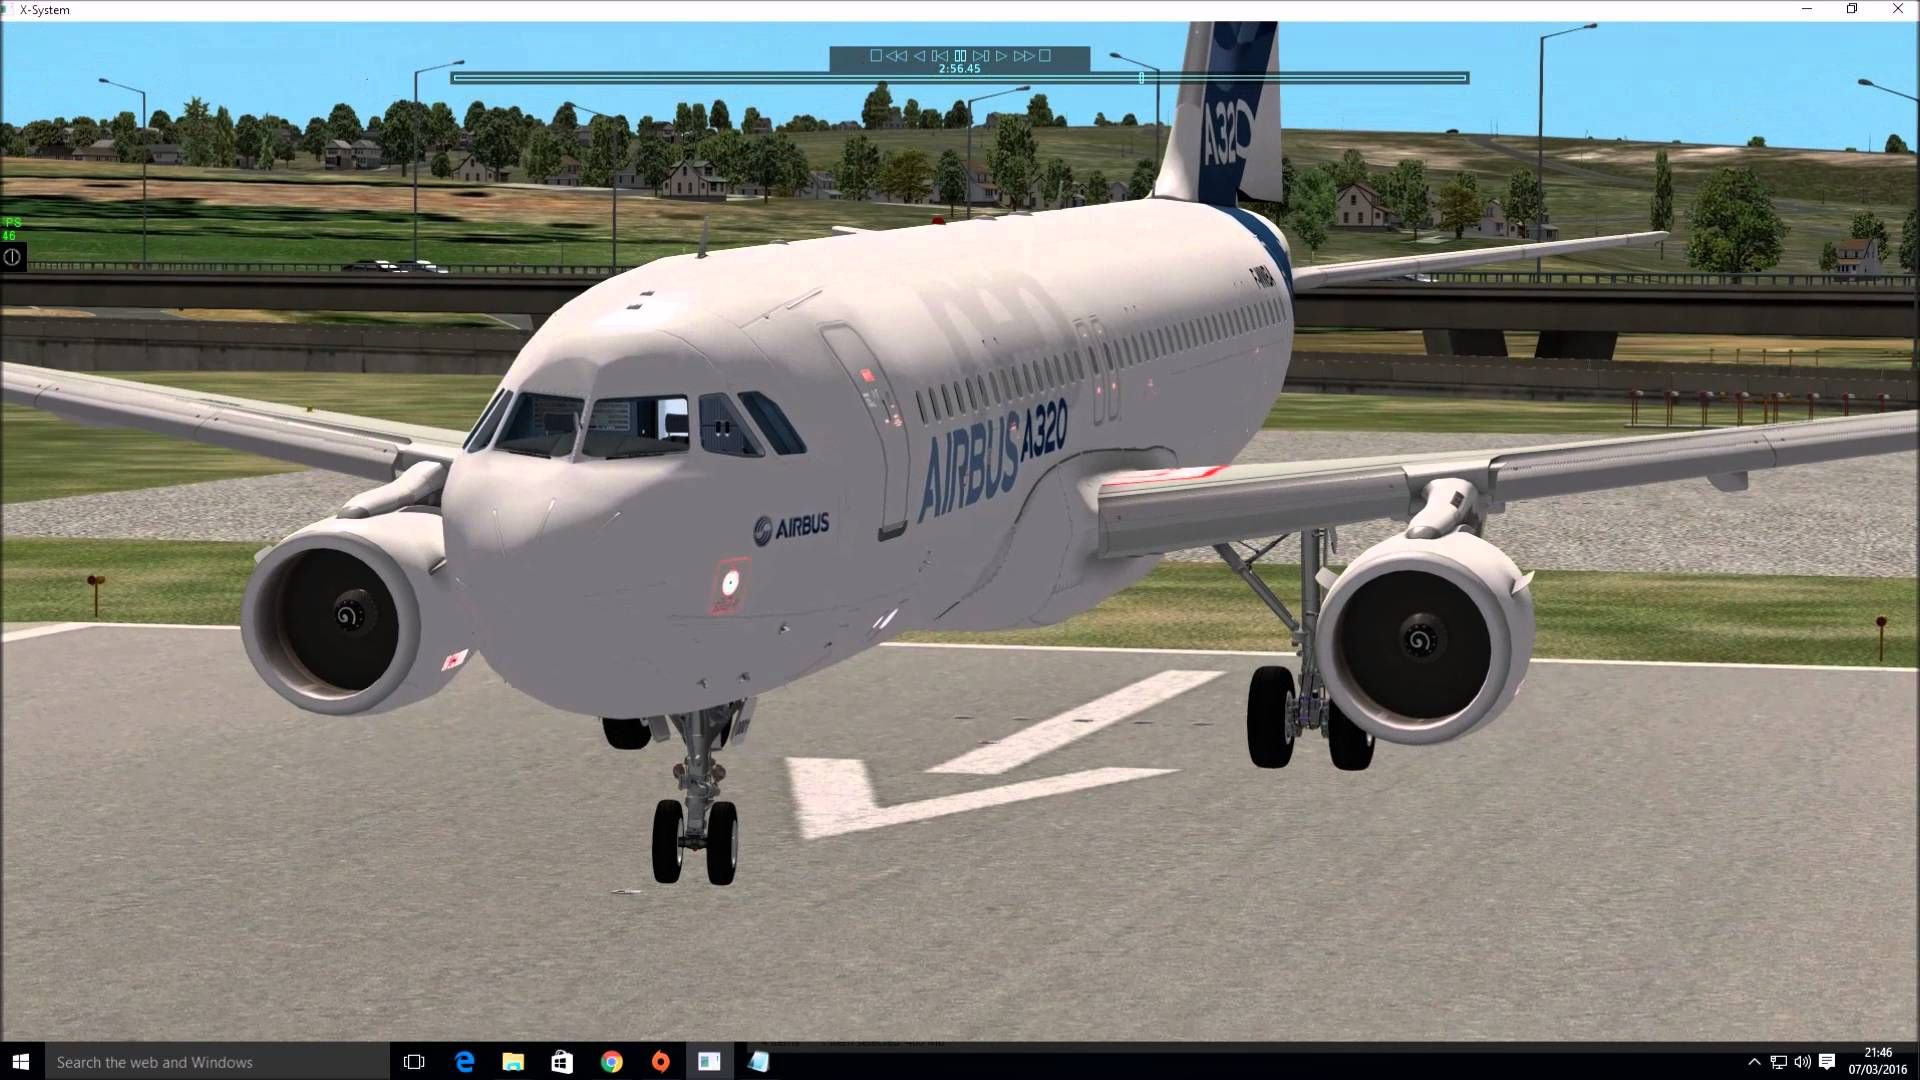 Microsoft flight simulator for windows 10